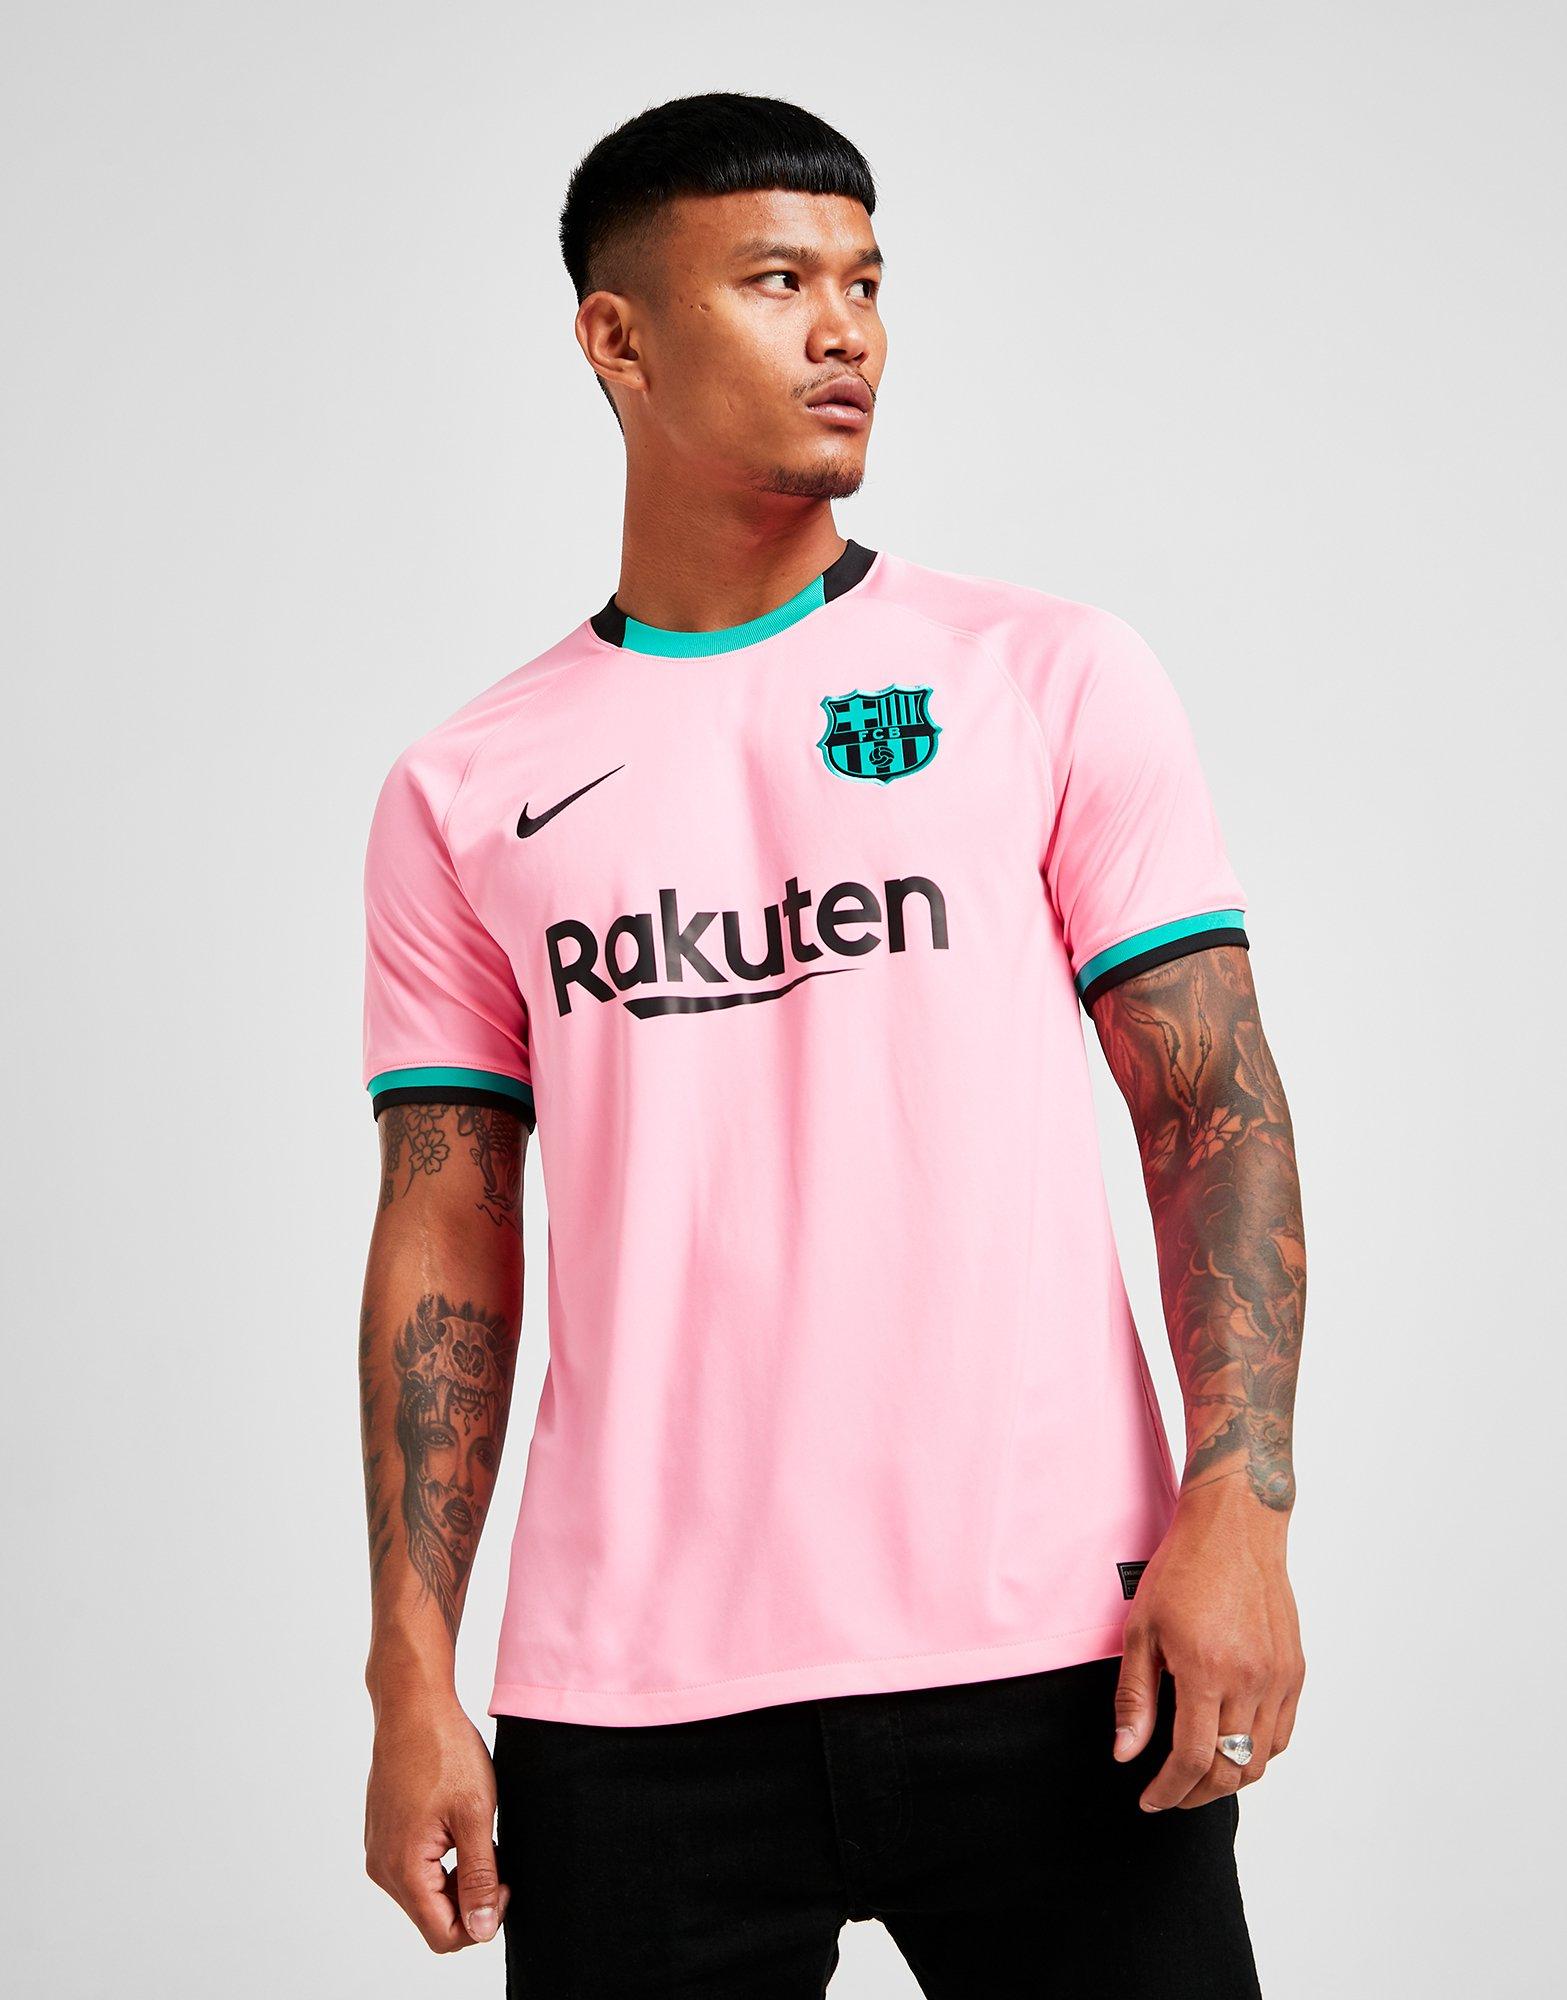 fc barcelona pink kit